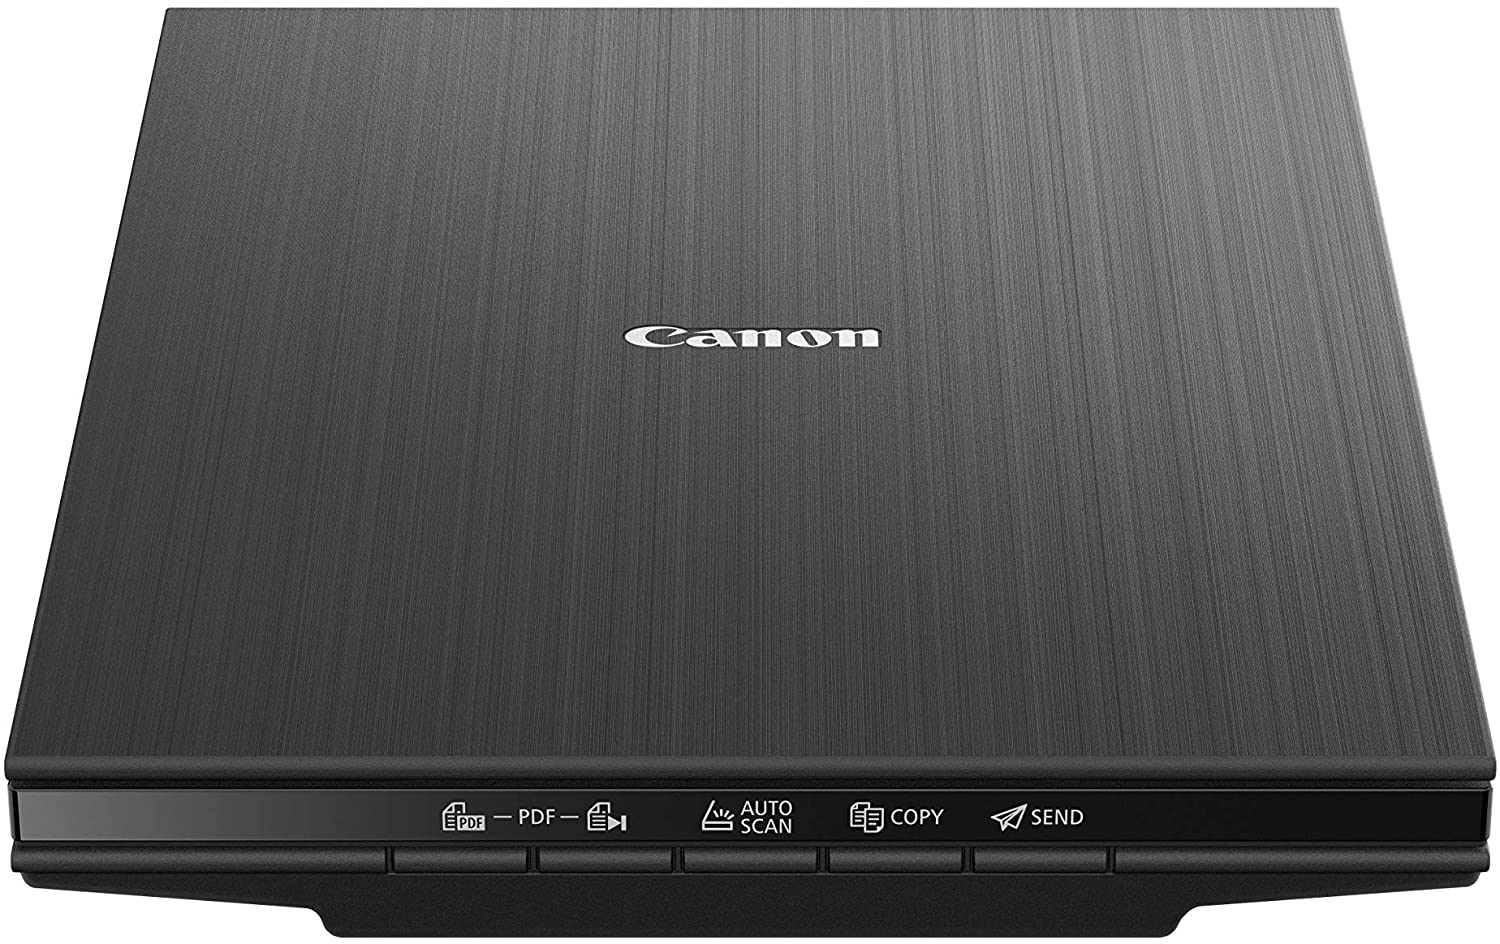  Canon LiDE 400 Colour Flatbed Scanner - Black uk reviews